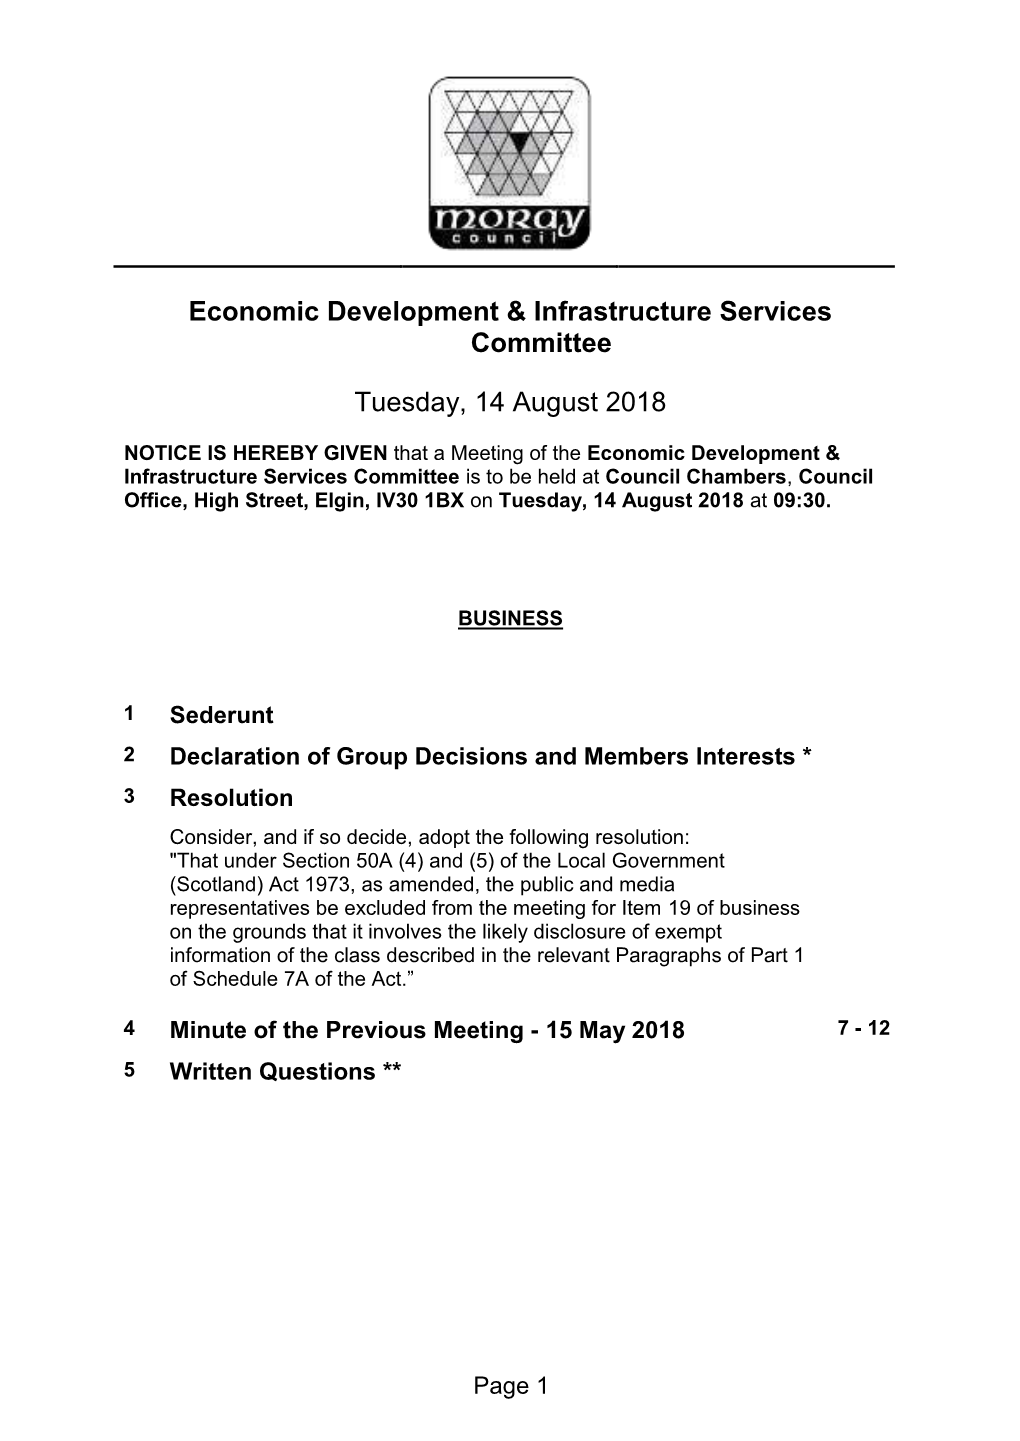 Economic Development & Infrastructure Services Committee